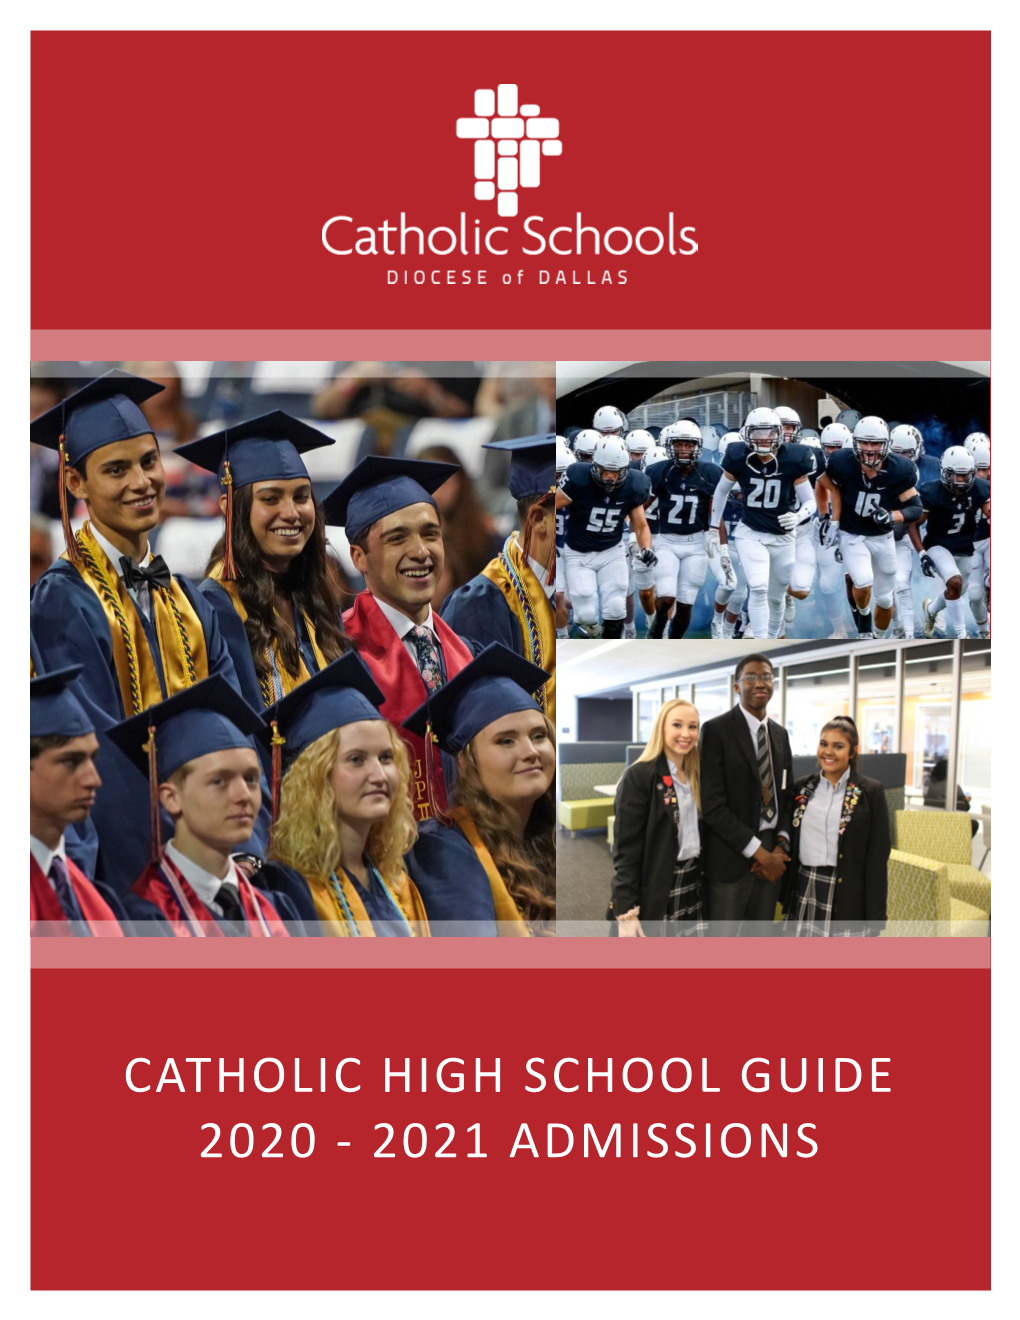 Catholic High School Guide 2020 - 2021 Admissions